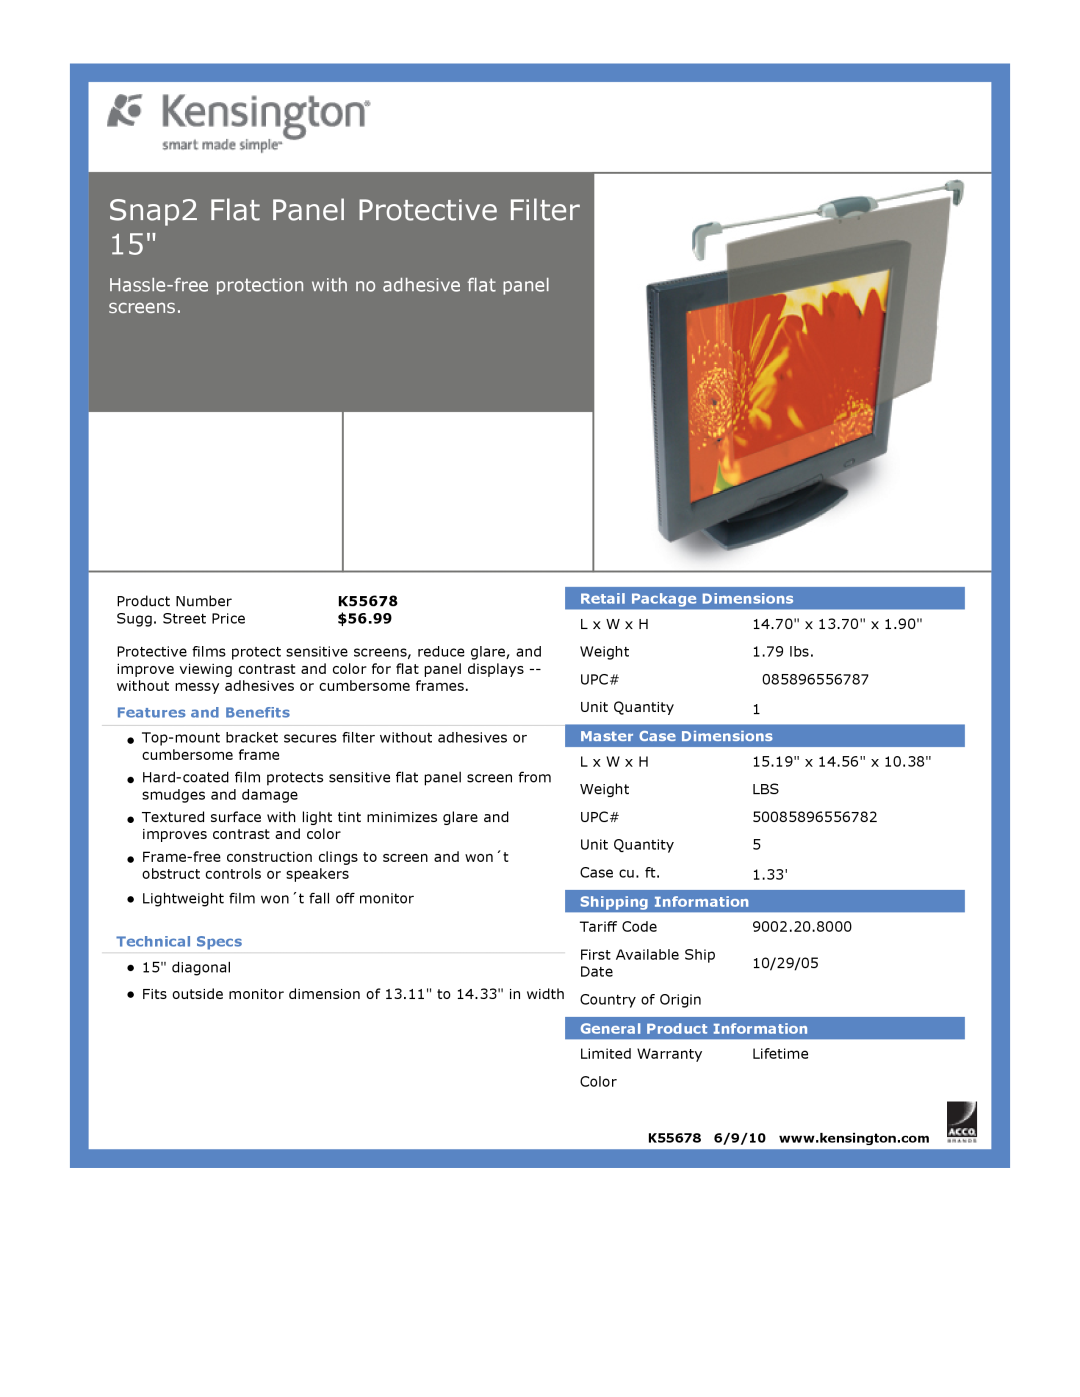 Kensington EU64325 dimensions Snap2 Flat Panel Protective Filter, $56.99, Features and Benefits, Technical Specs 